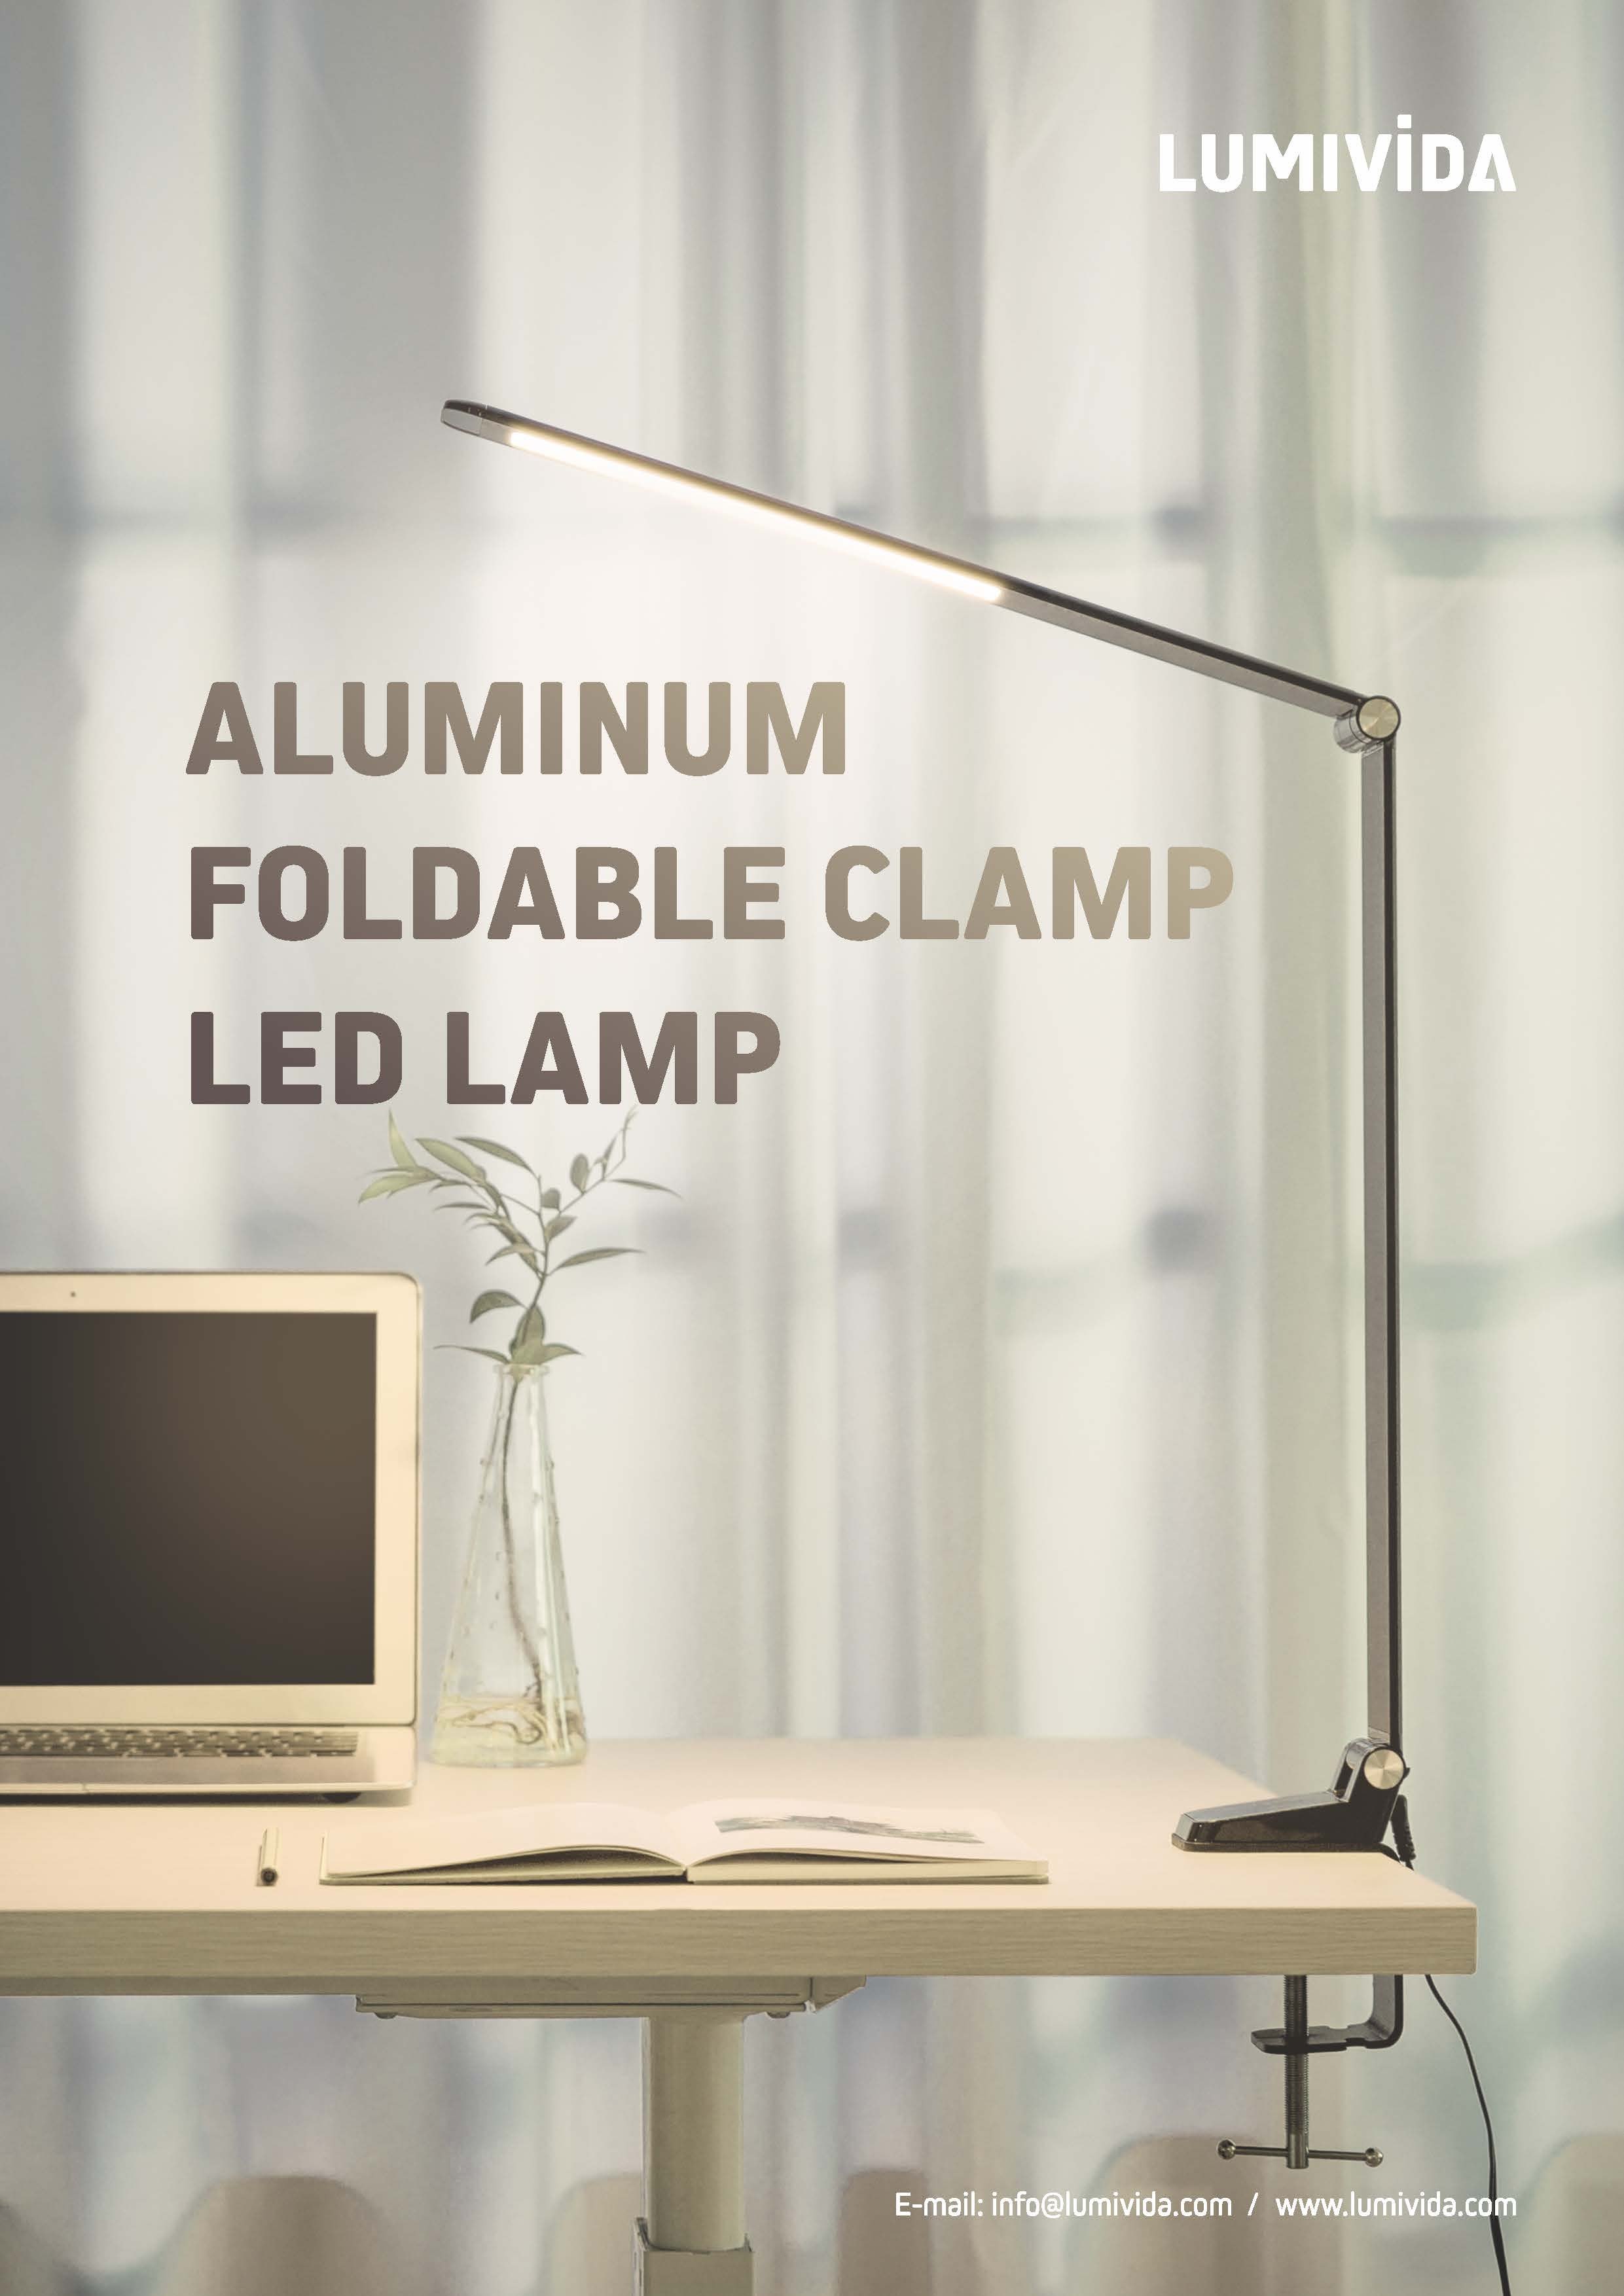 LDL05-3 4 5-Aluminum Foldable Clamp LED Lamp